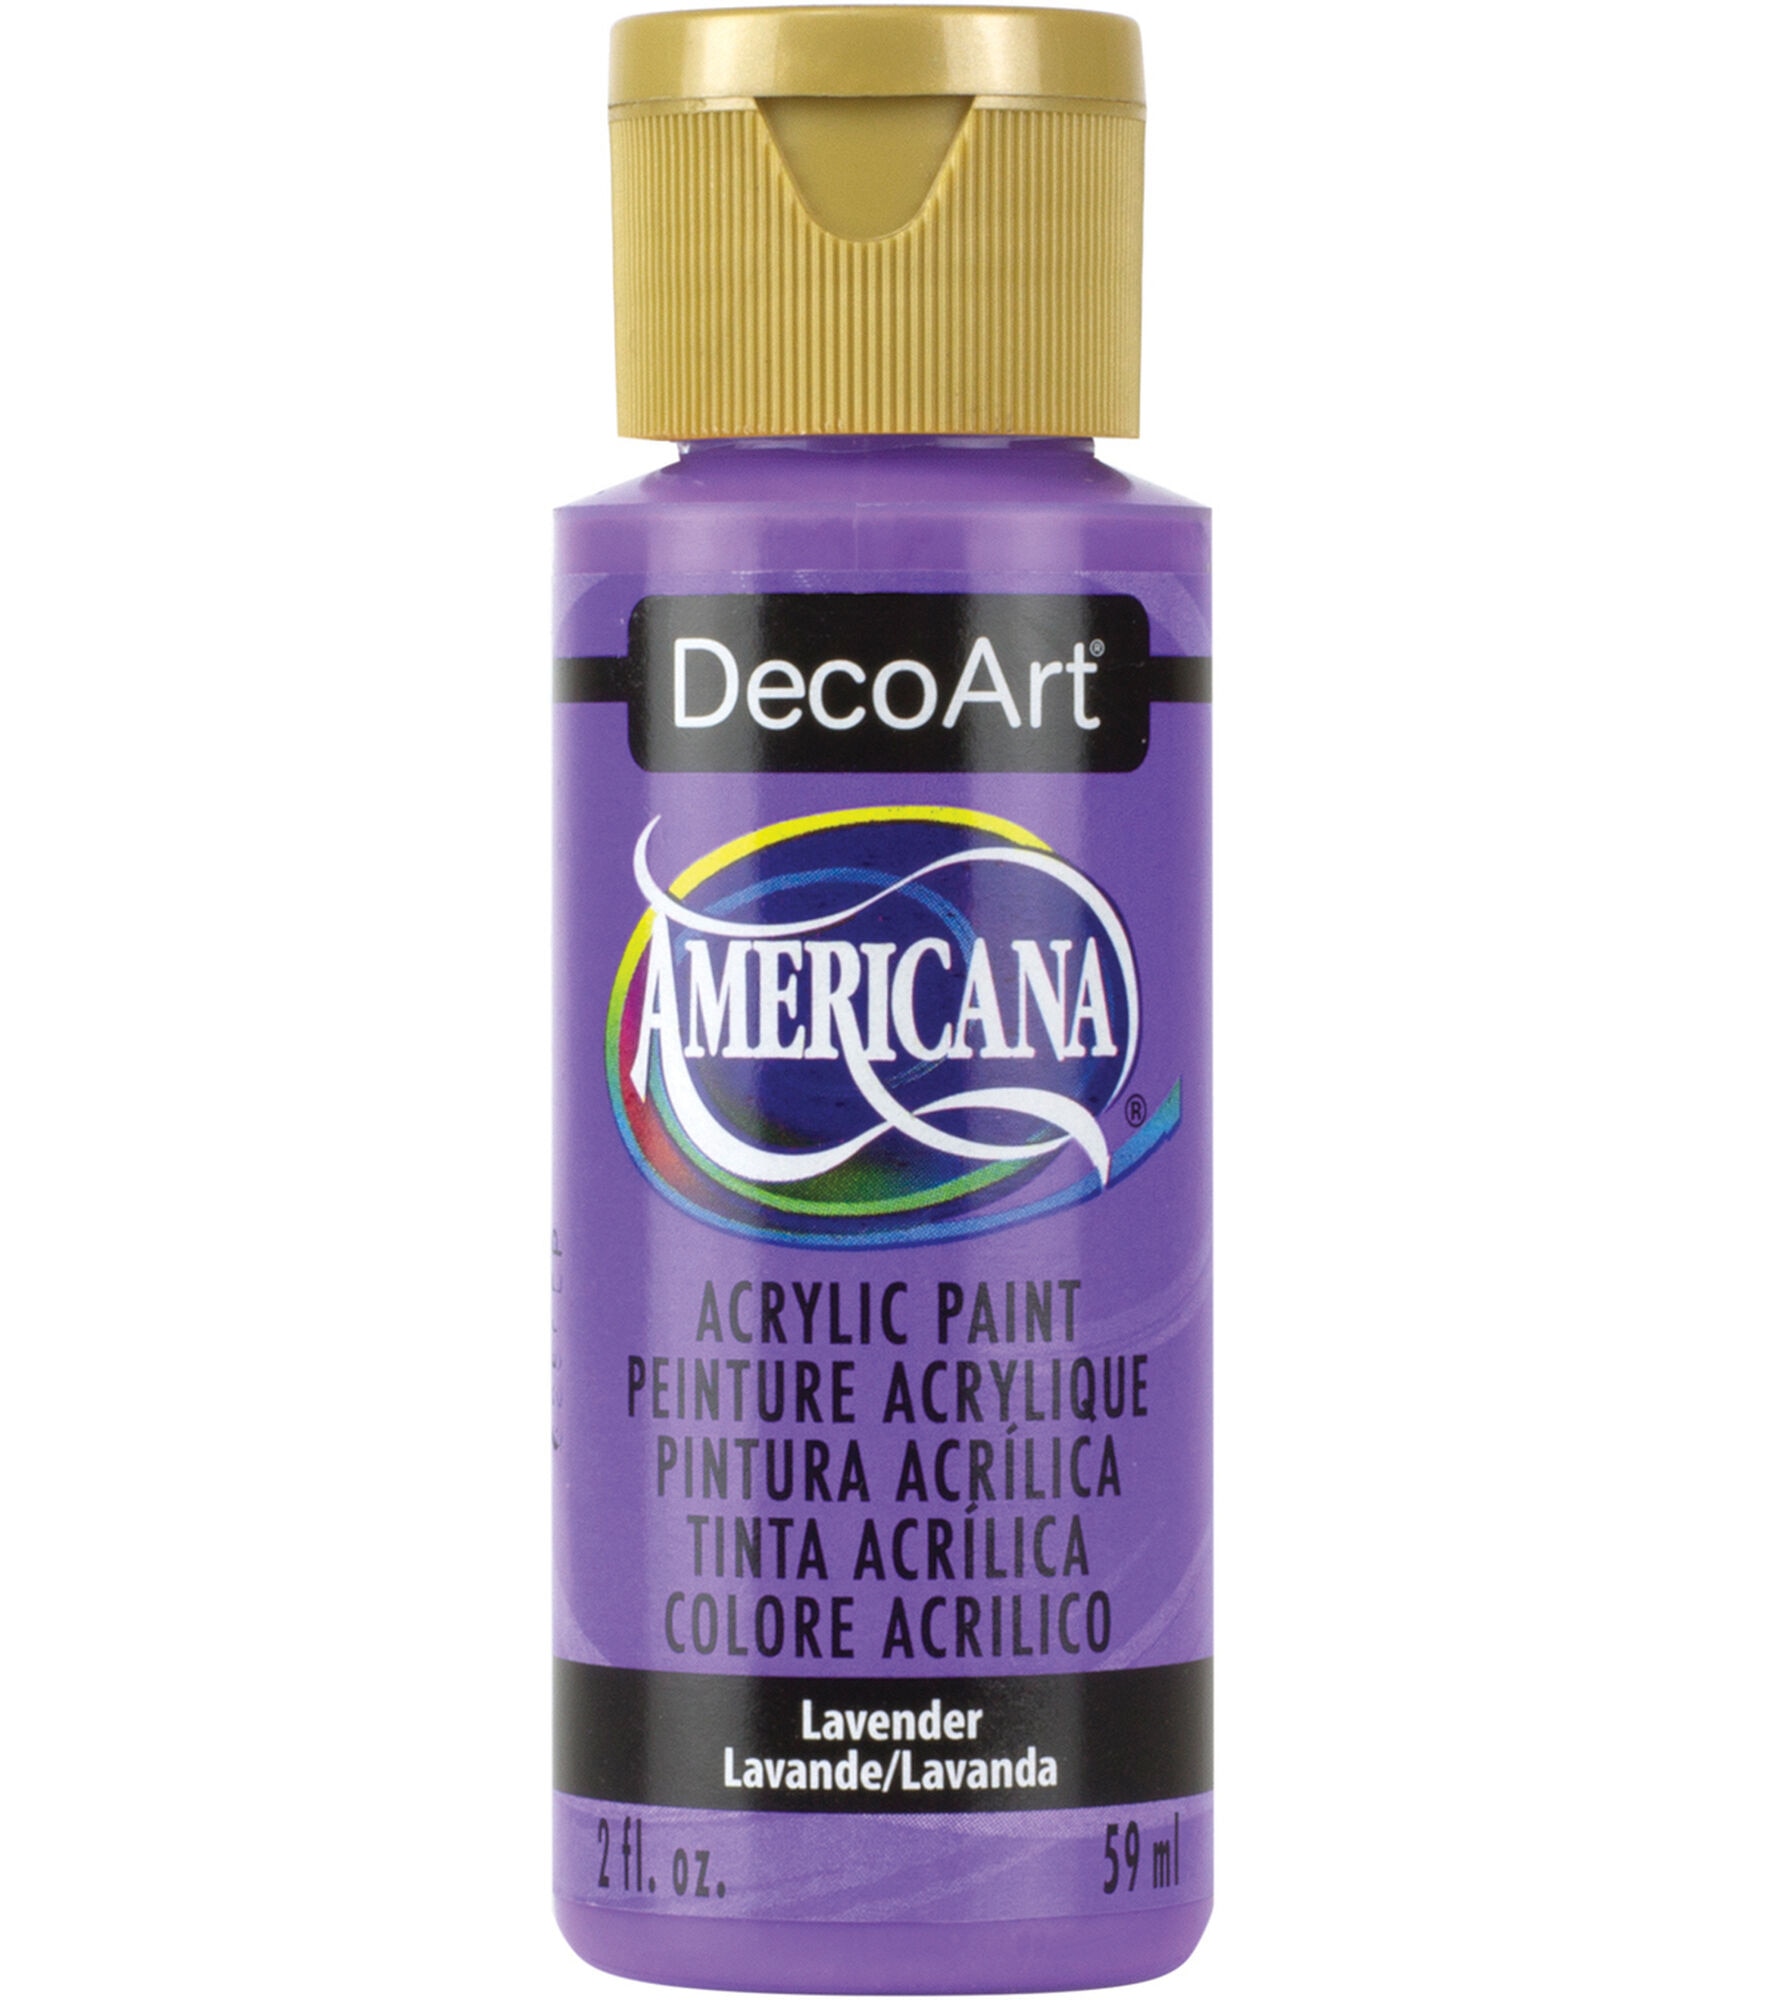 DecoArt Americana Acrylic 2oz Paint, Lavender, hi-res